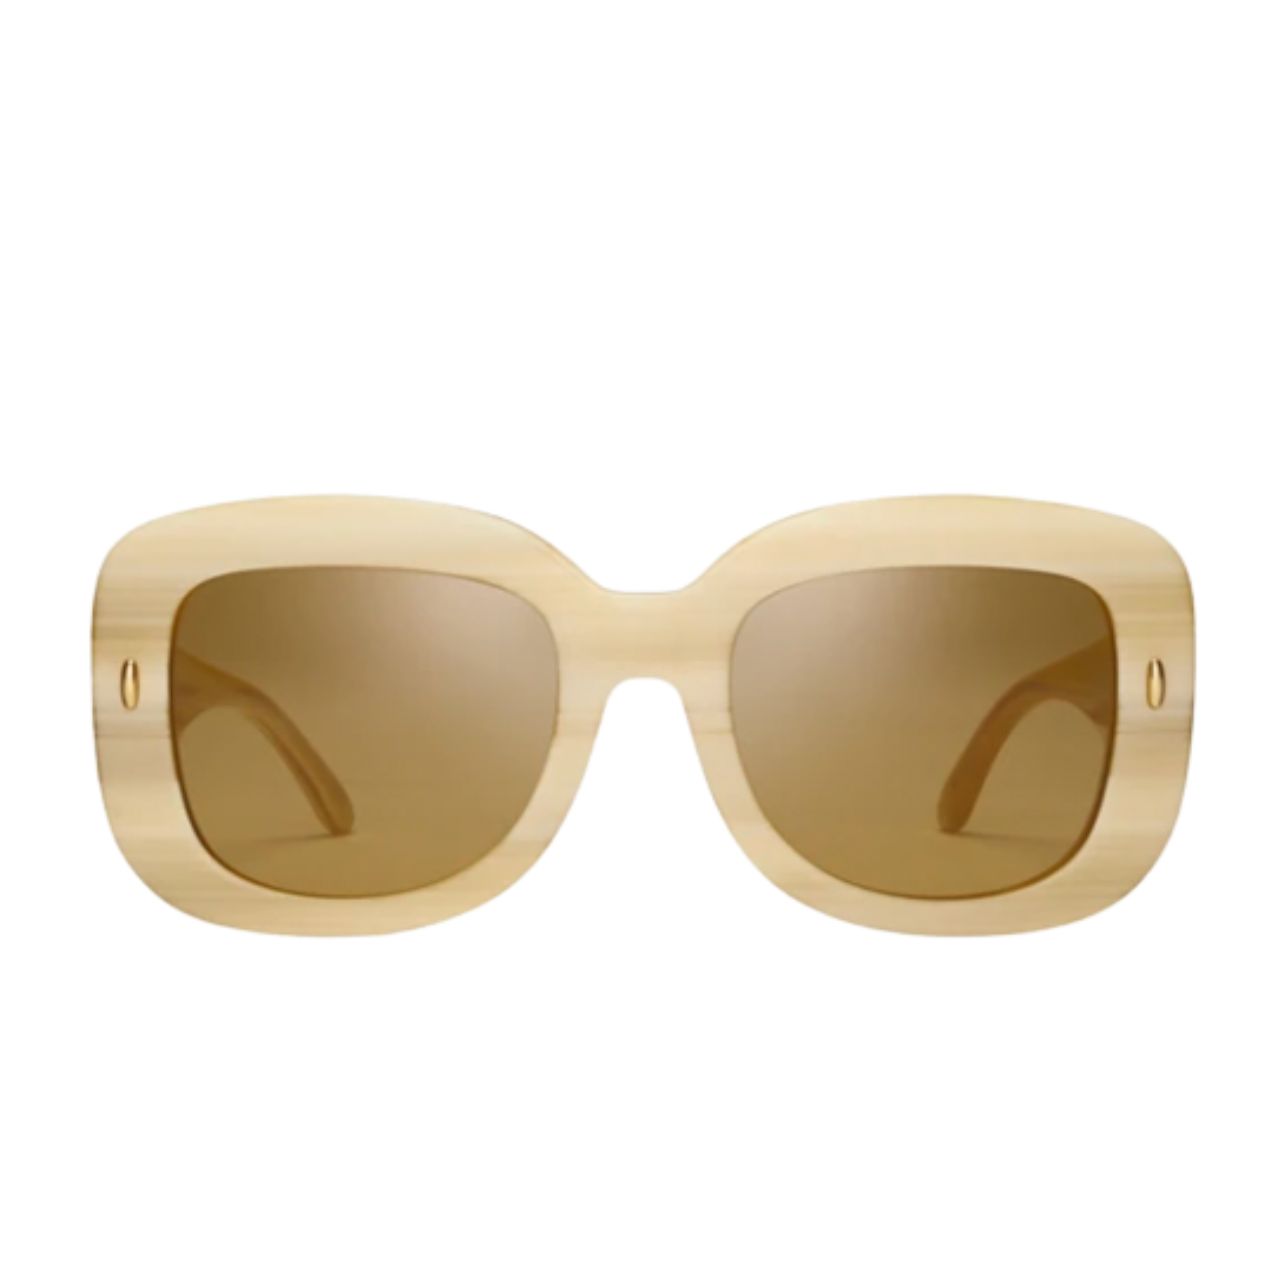 Miller oversized square sunglasses